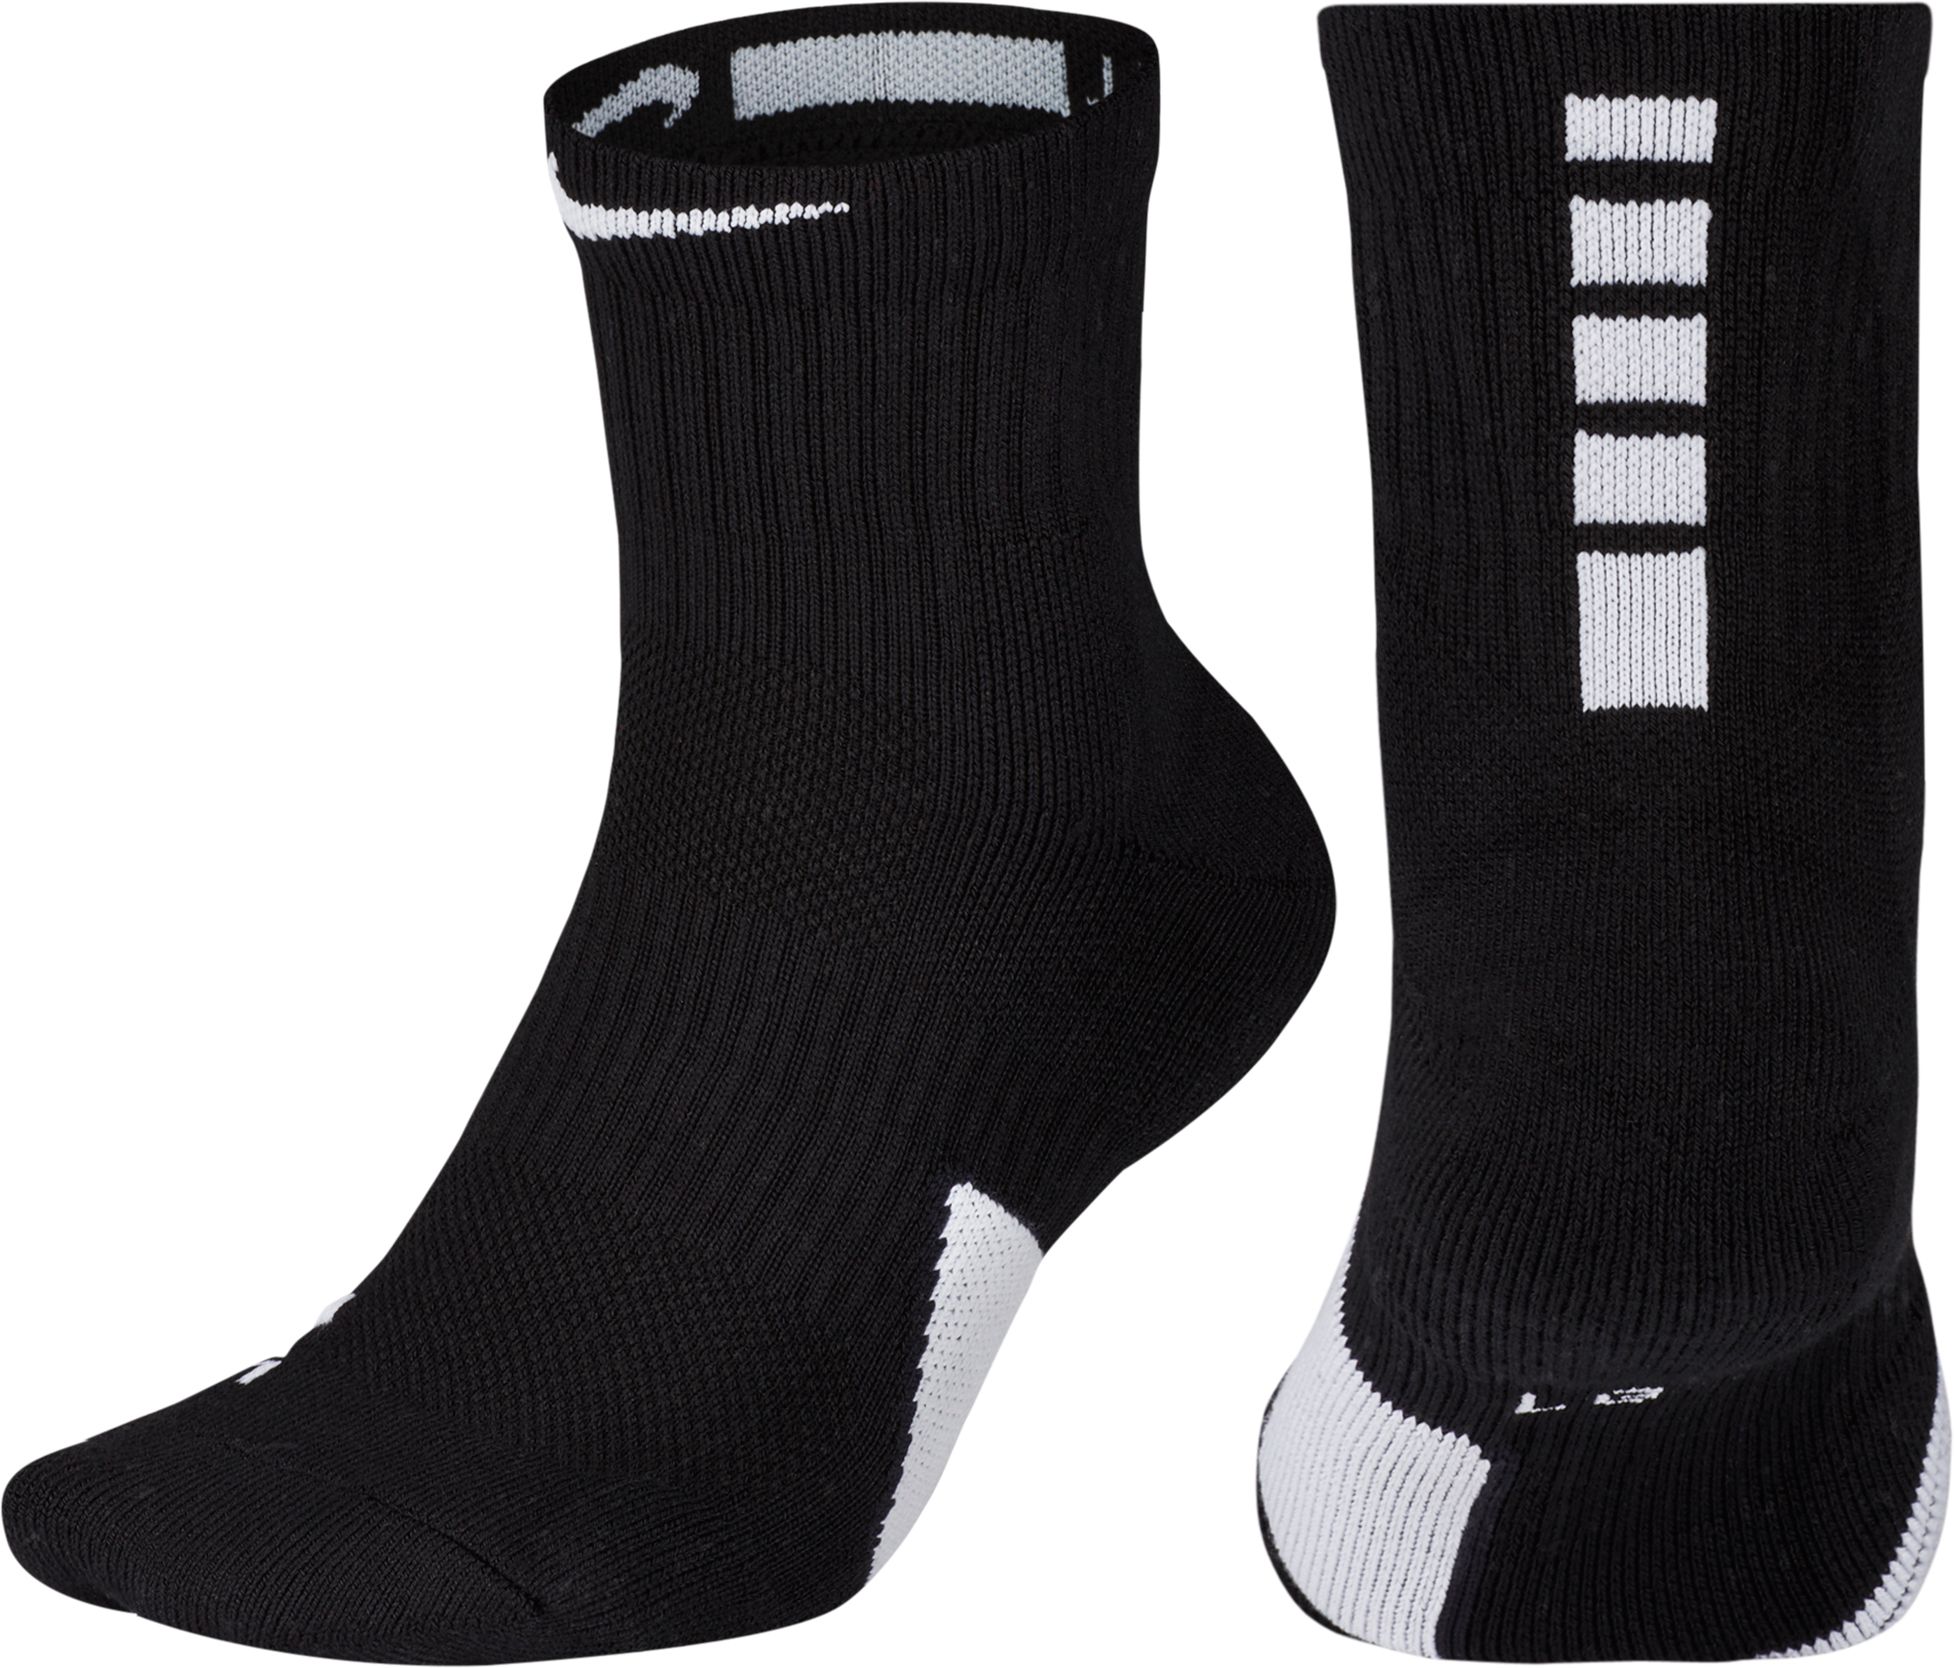 white nike socks mid rise